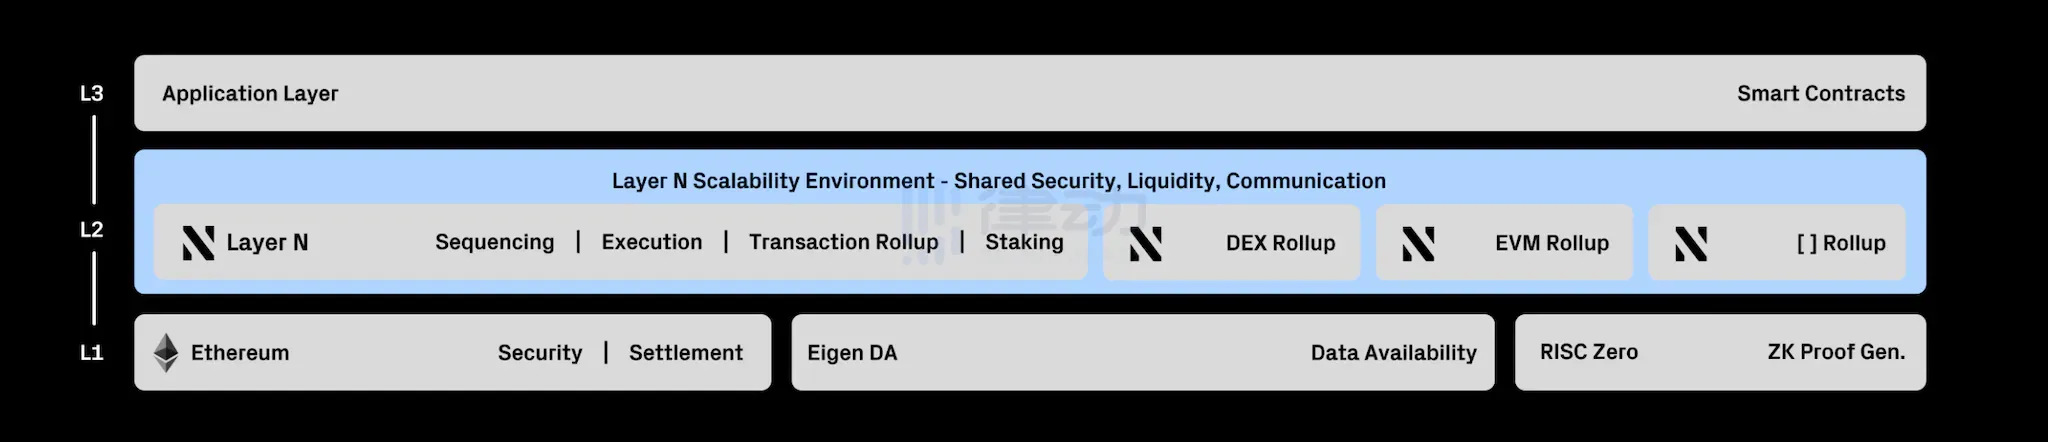 以EigenDA為DA層、專注於DeFi的Layer2網路Layer N為何值得關注？